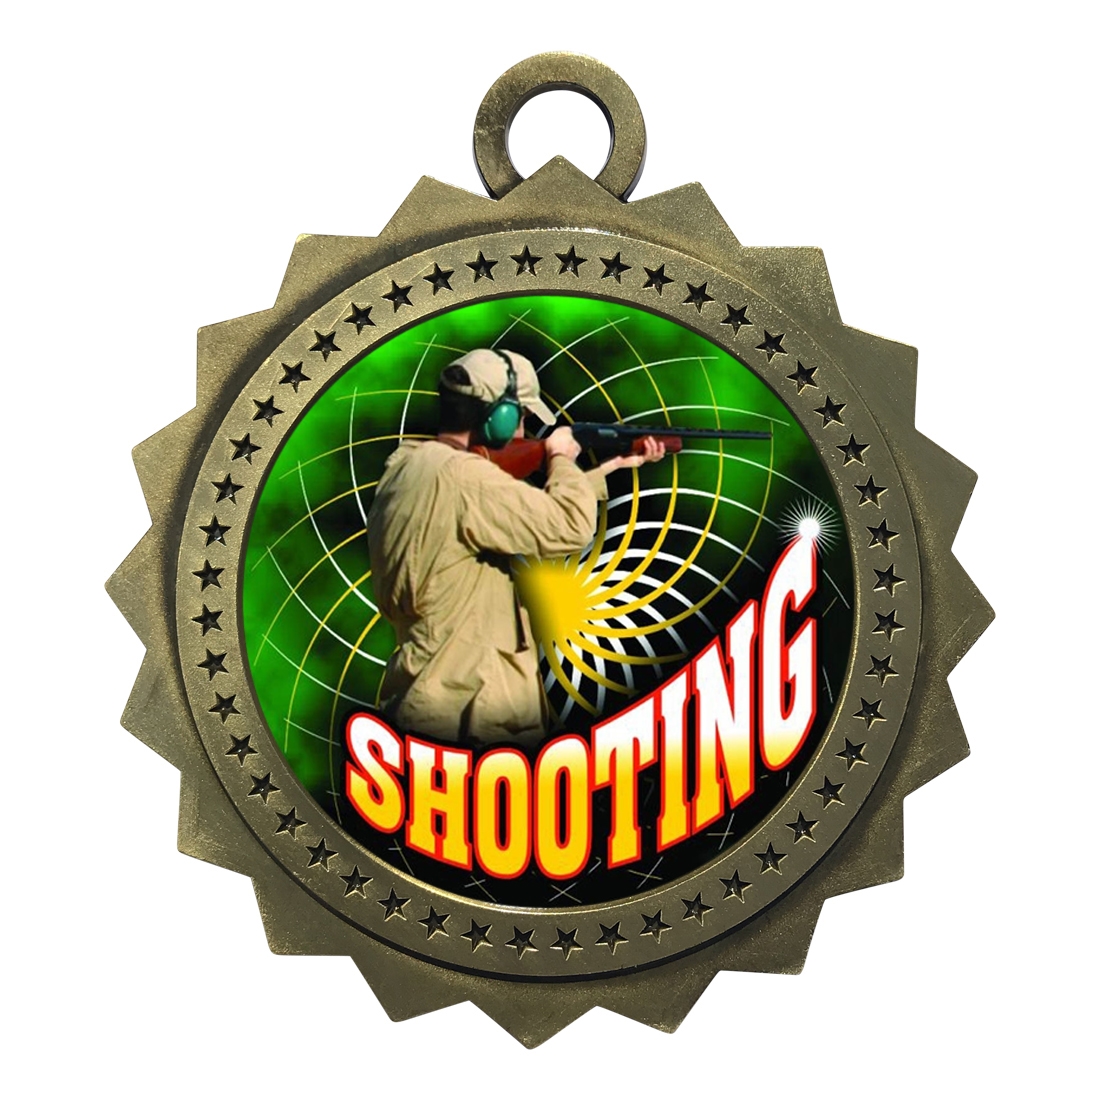 3" Shooting Medal